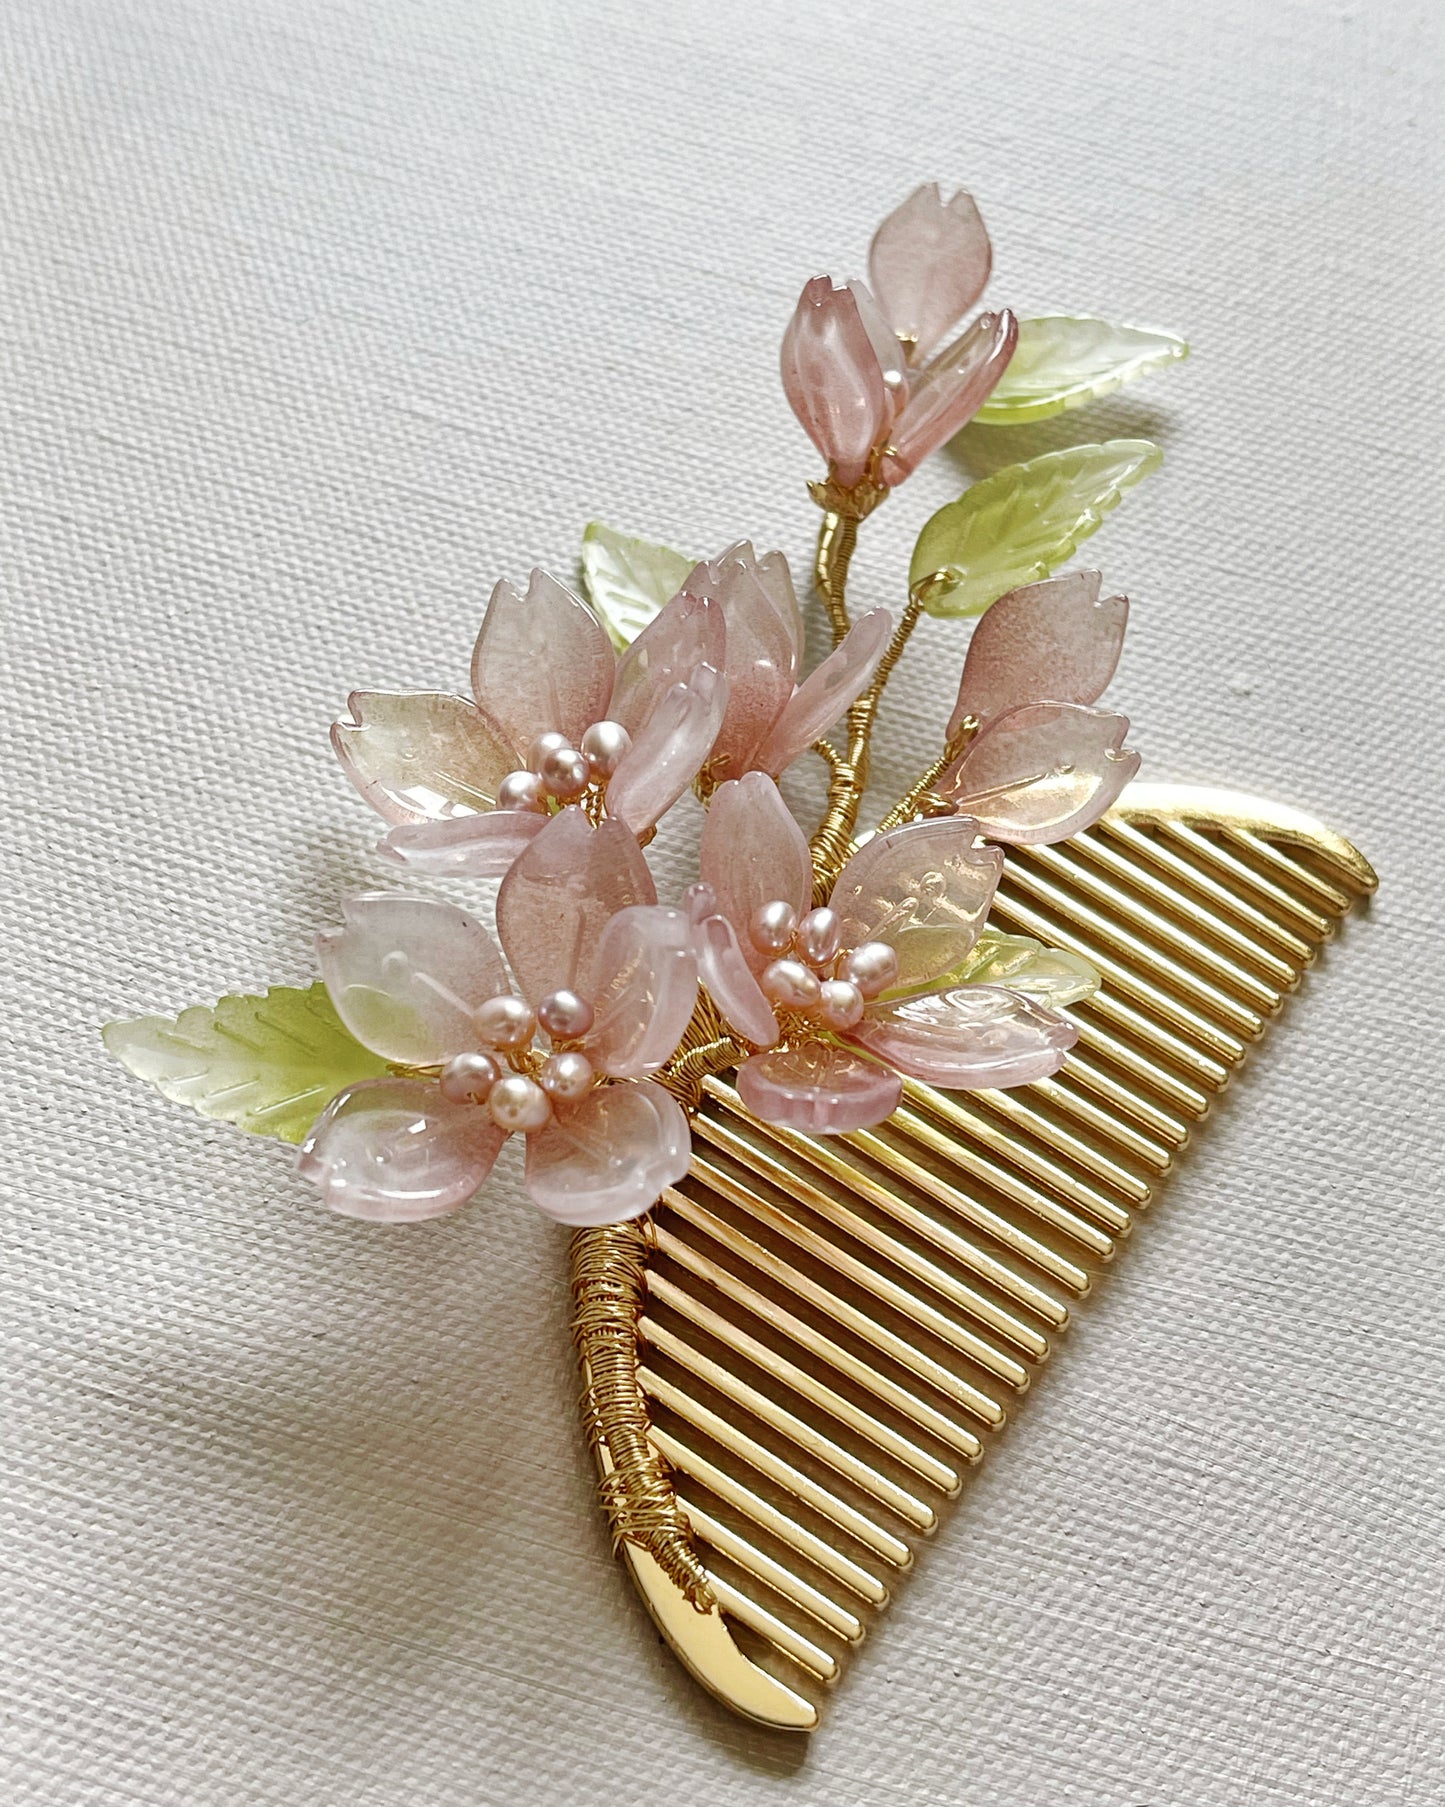 Someiyoshino sakura blossoms hairslide in antique pink